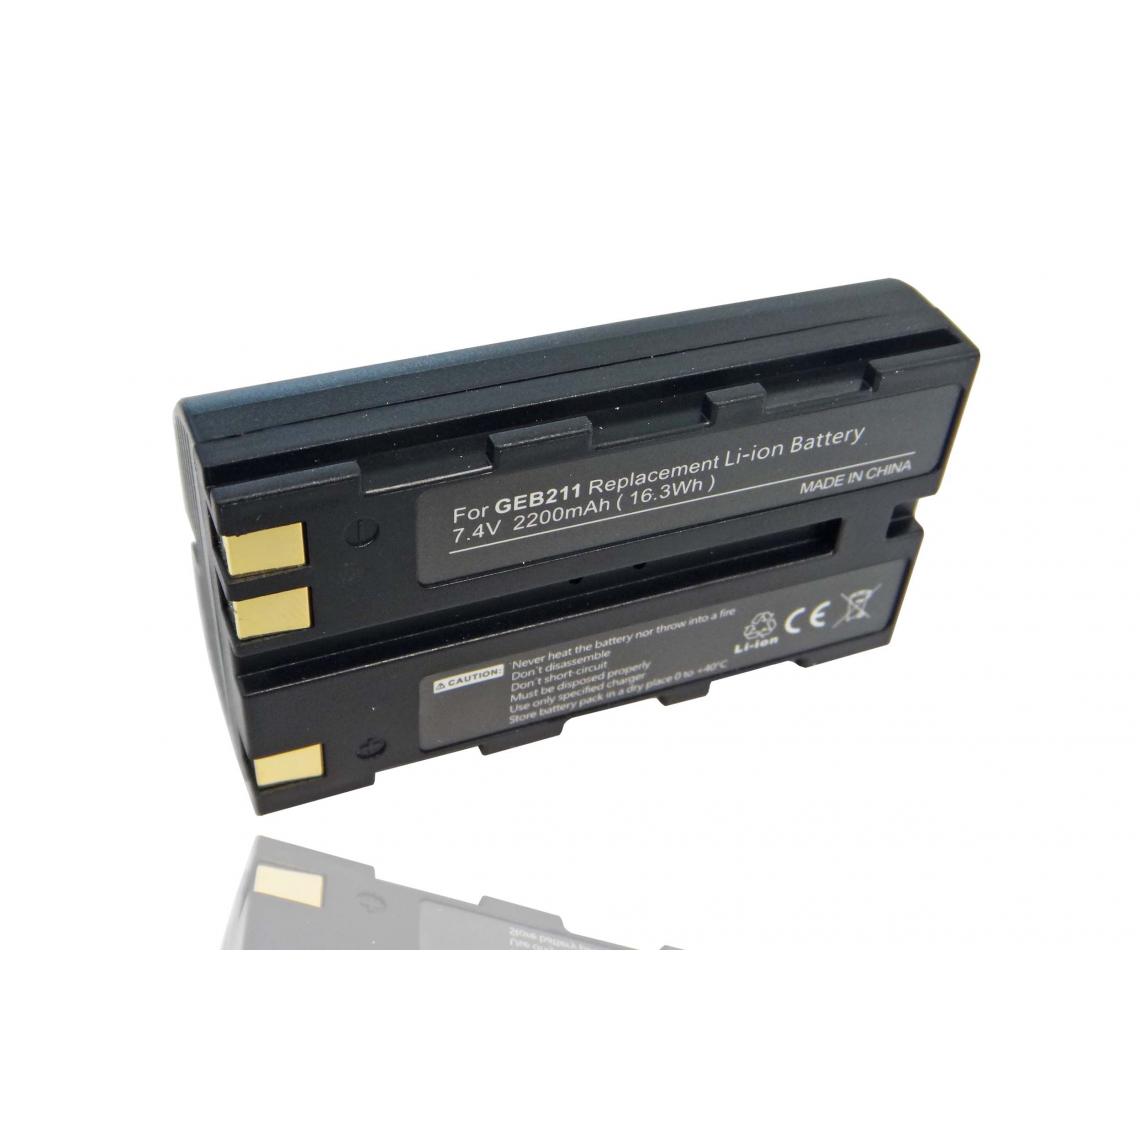 Vhbw - vhbw Batterie compatible avec Leica SR20, SR500, SR510, SR520 dispositif de mesure laser, outil de mesure (2200mAh, 7,4V, Li-ion) - Piles rechargeables